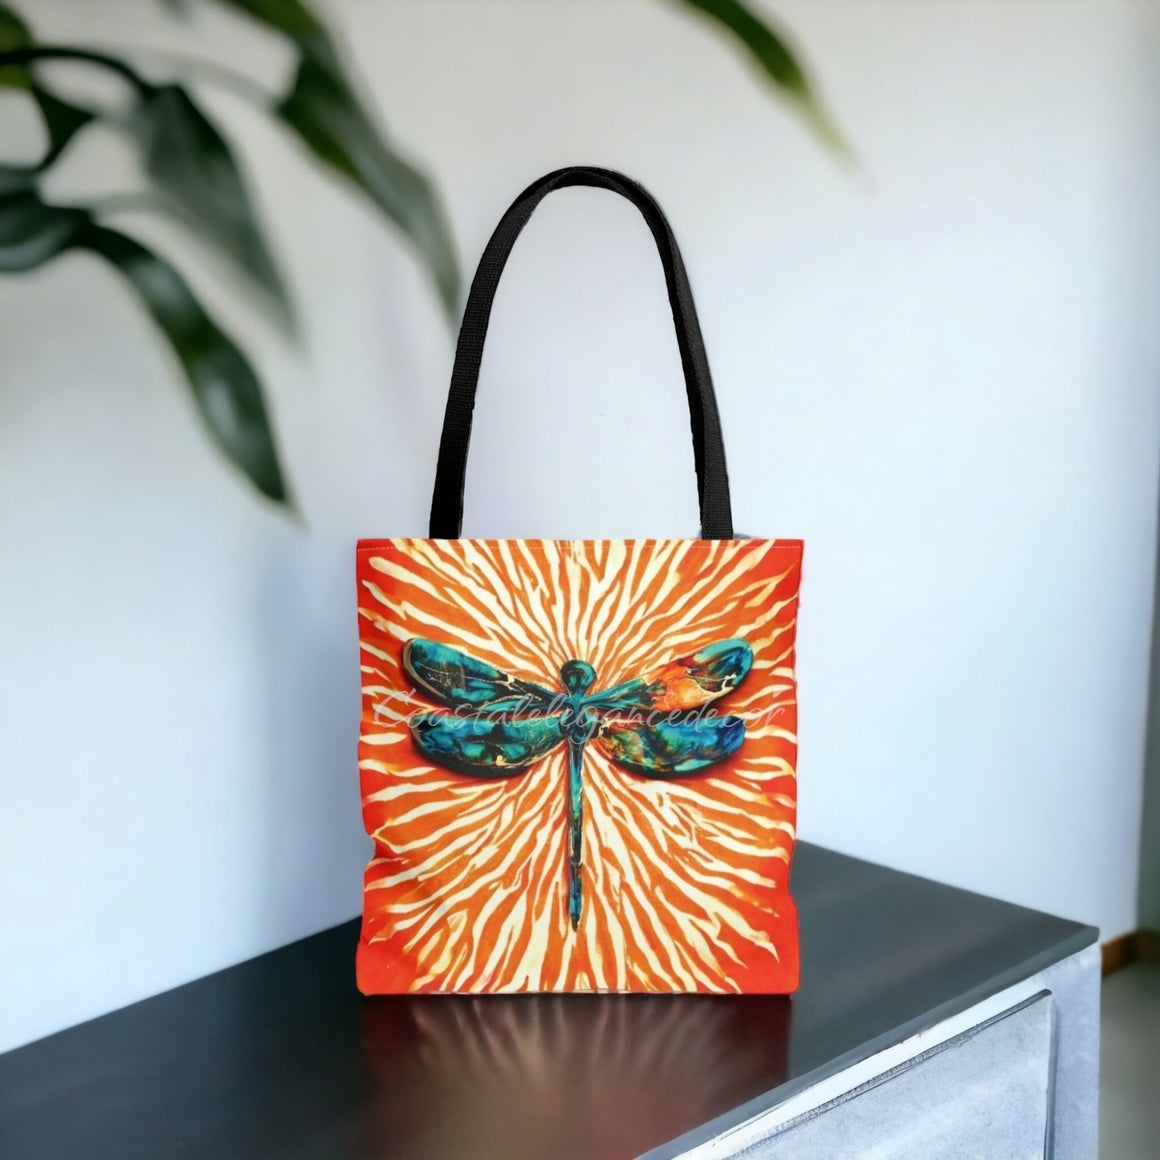 Original Art Dragonfly with Sunburst Tote Bag Printed 2 sizes